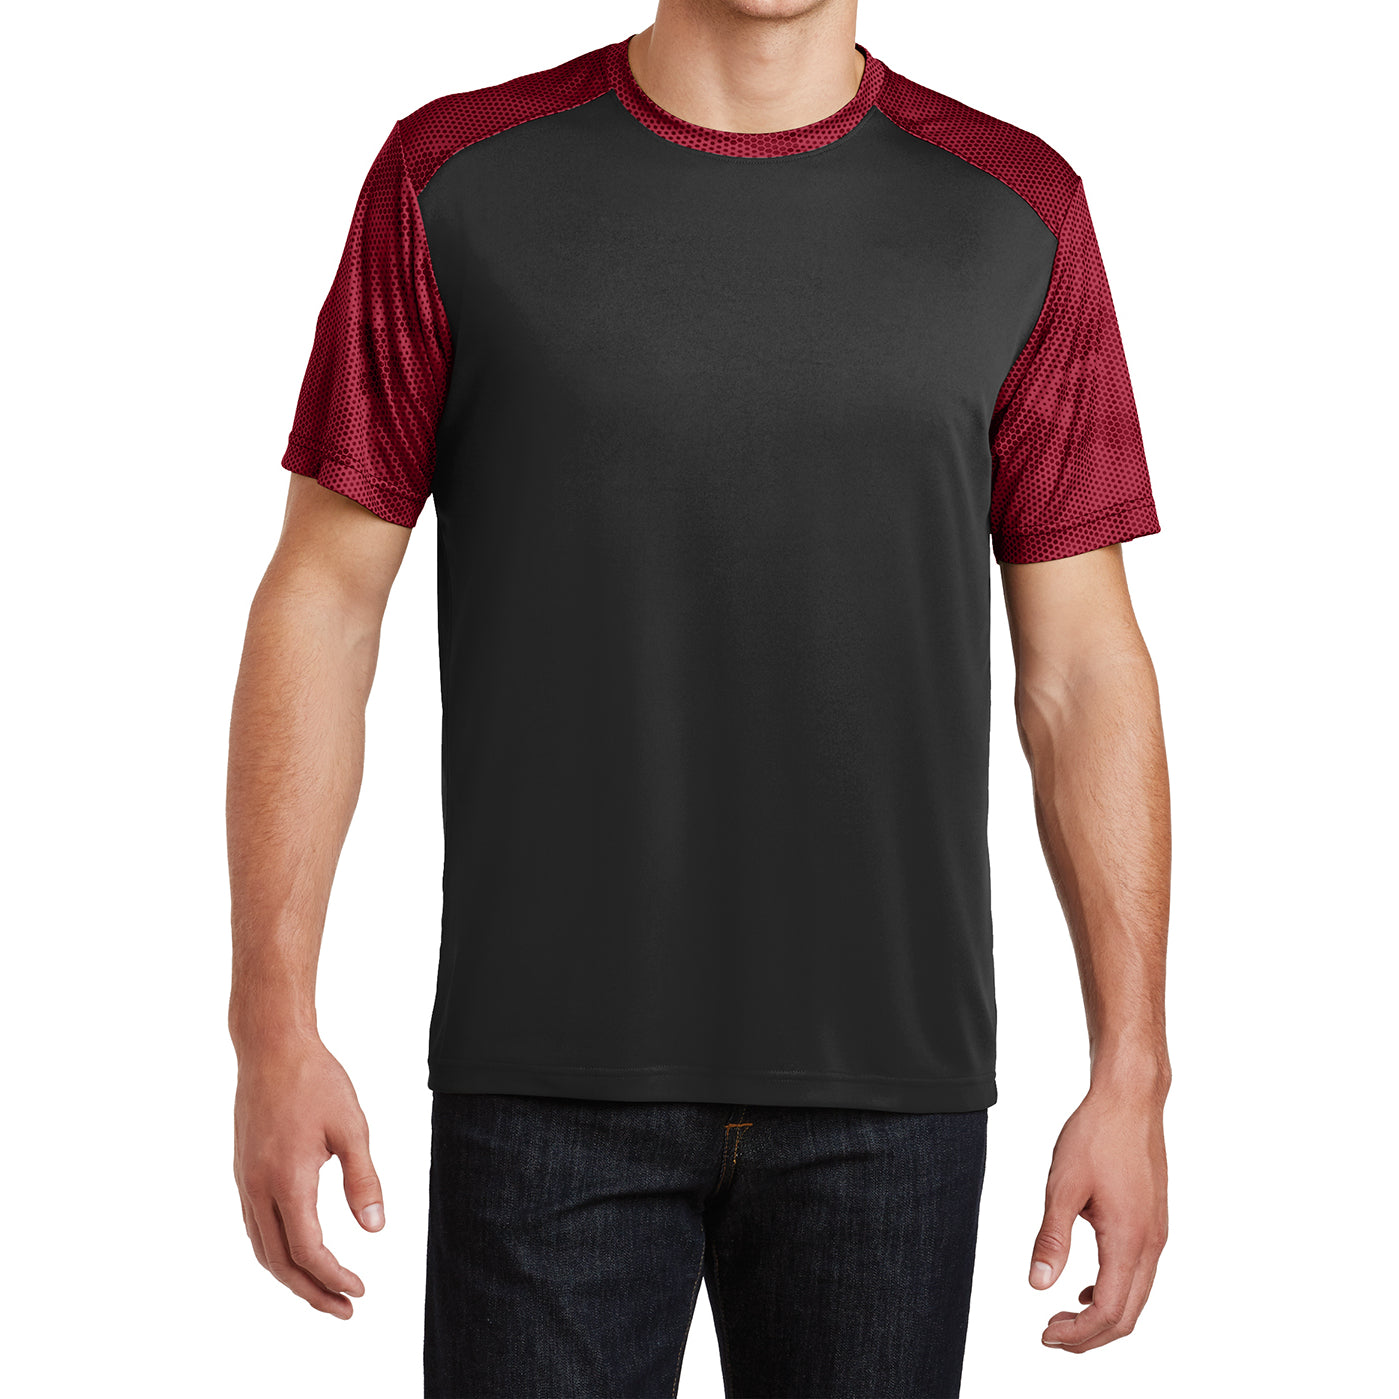 Men's CamoHex Colorblock Tee Shirt Black/ Deep Red Front